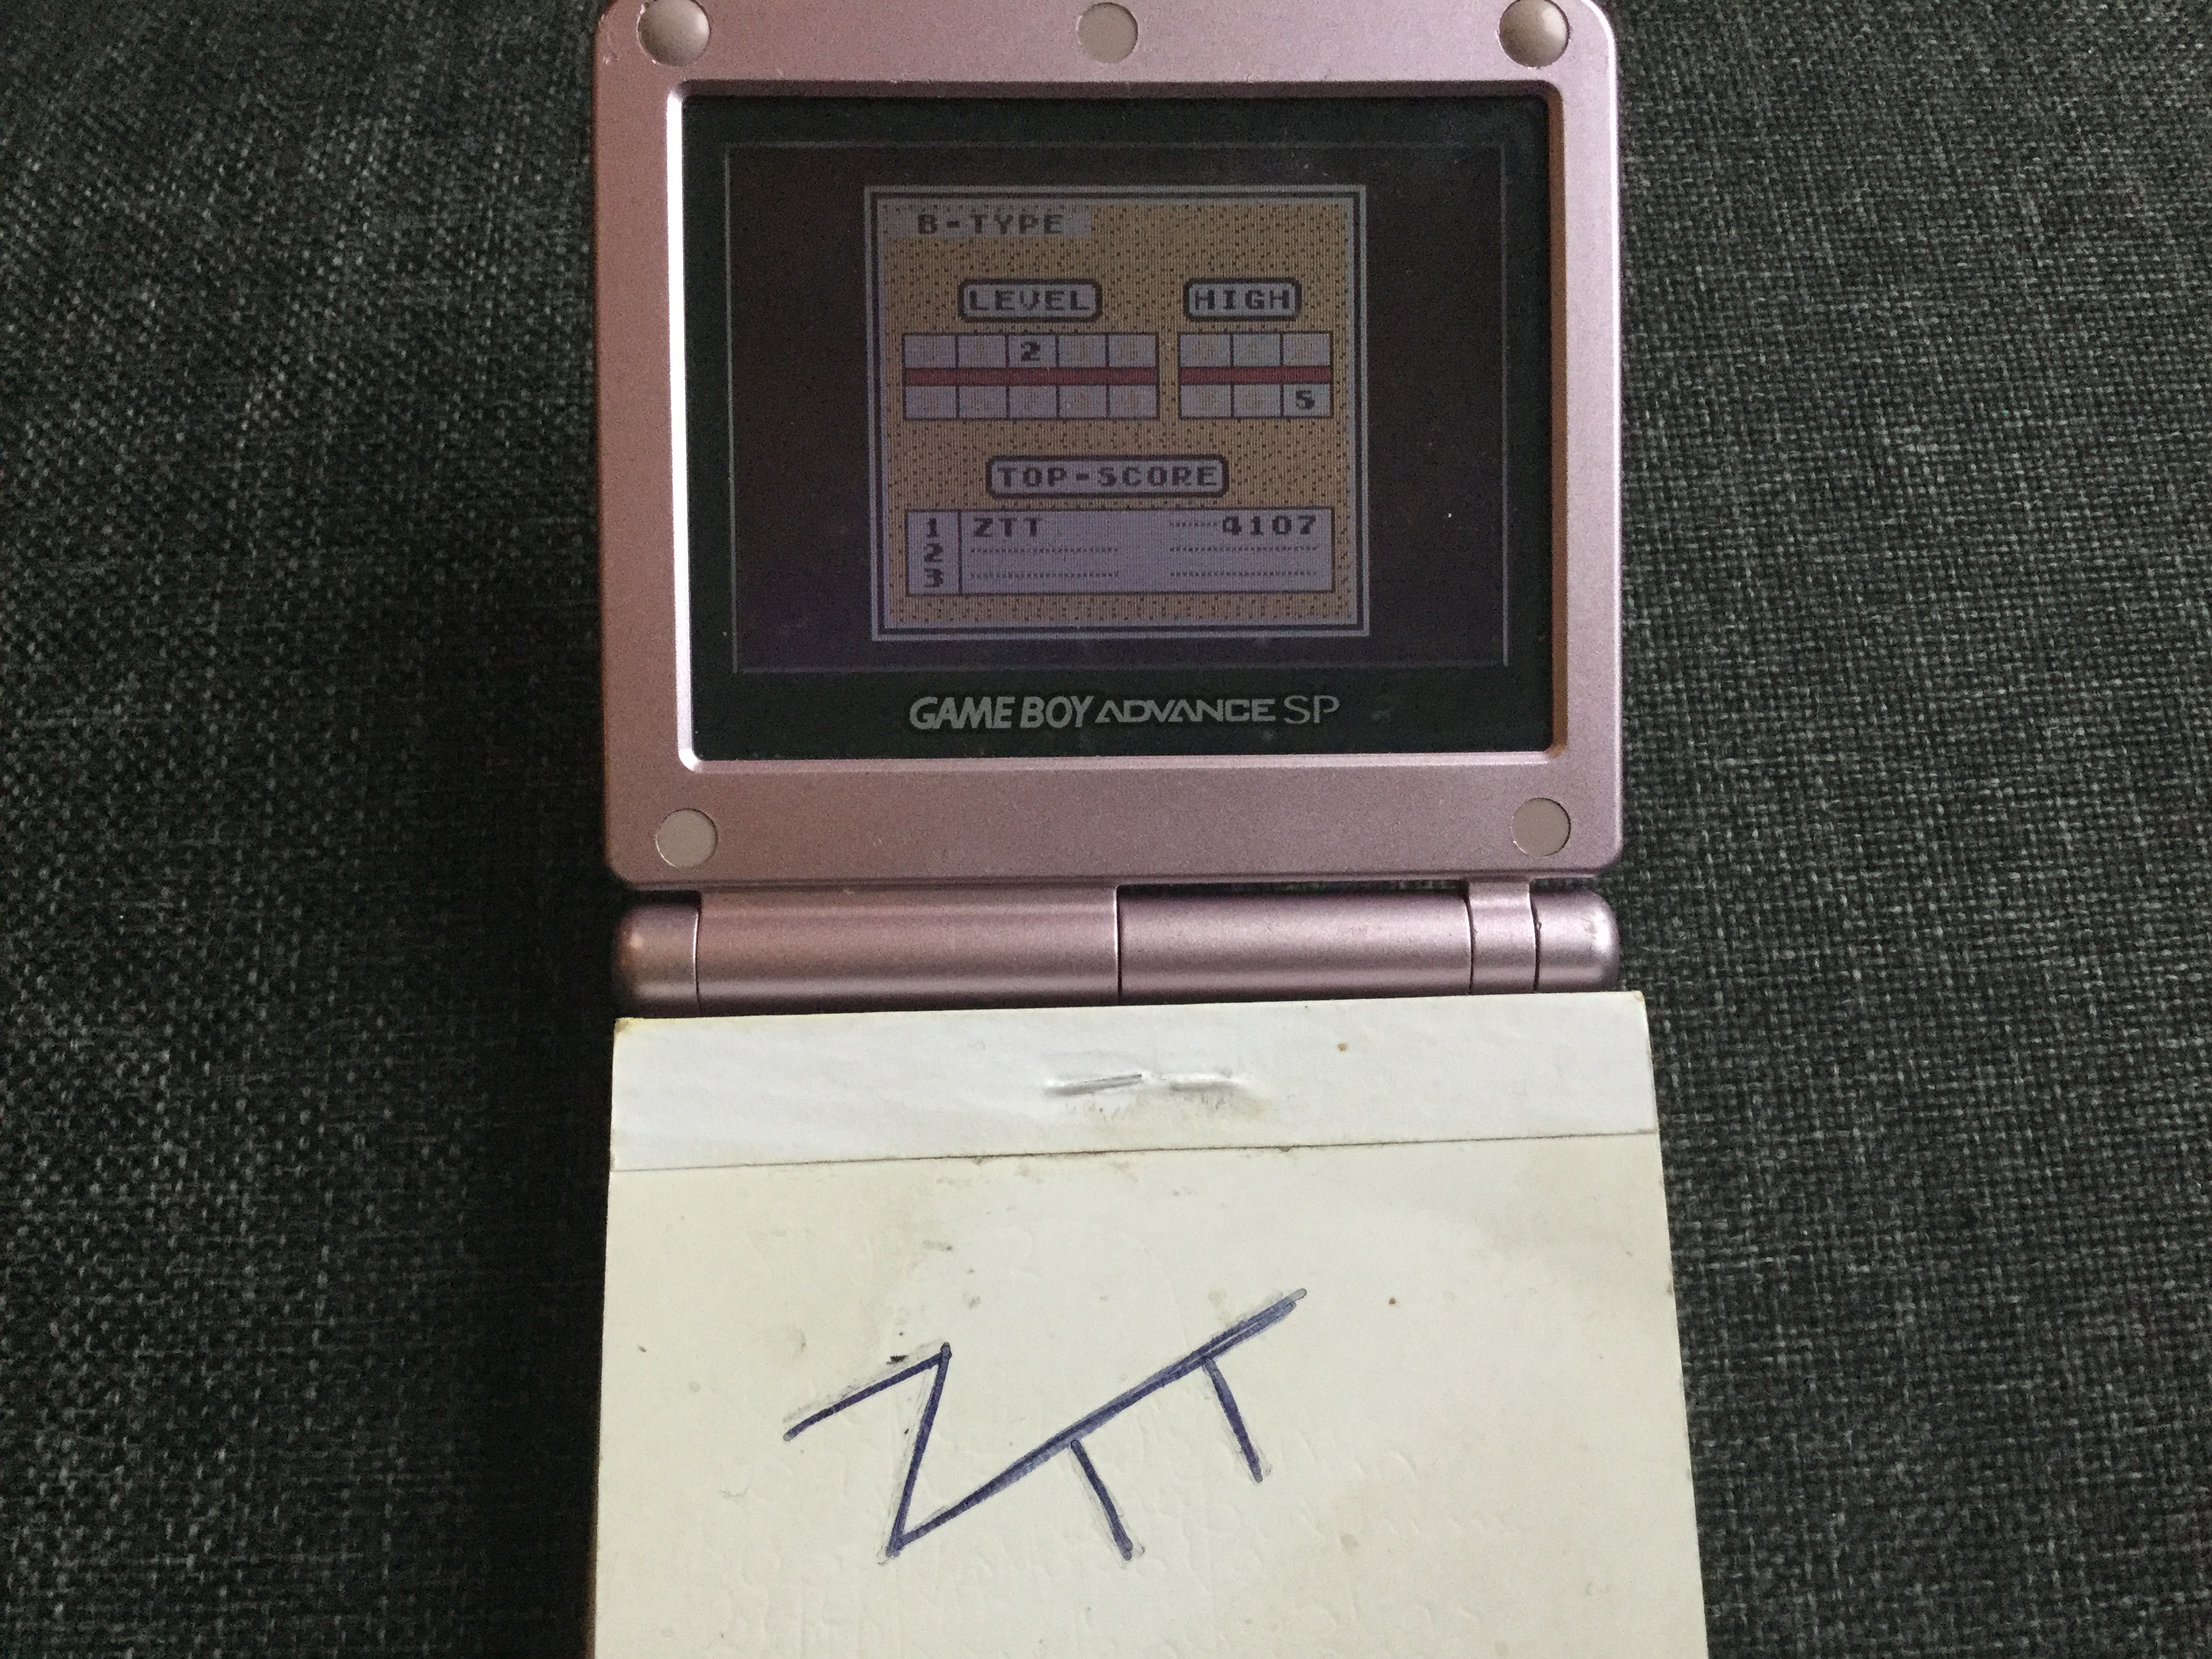 Frankie: Tetris: Type B [Level 2 / High 5] (Game Boy) 4,107 points on 2019-11-18 02:05:30